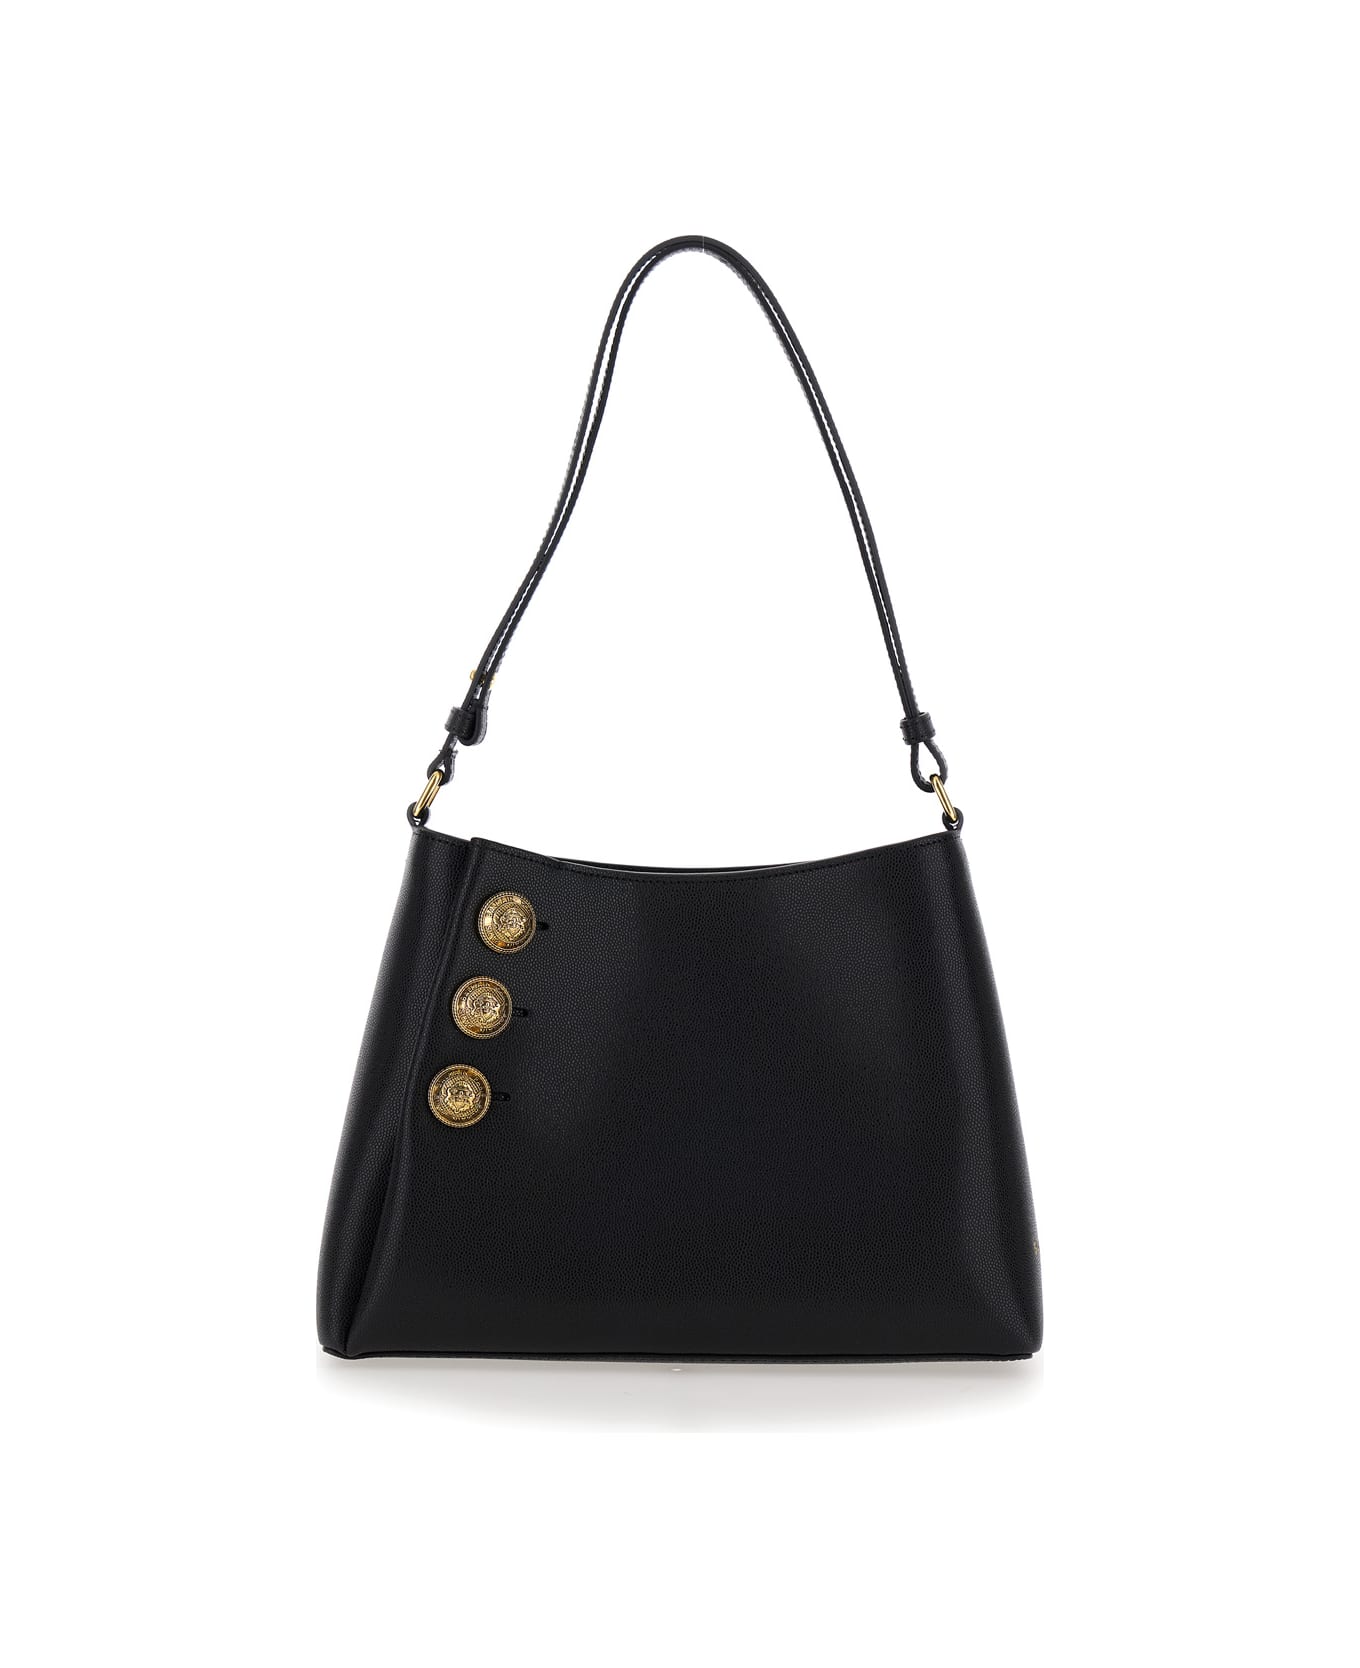 Balmain Black Shoulder Bag With Emblème Motif In Grained Leather Woman - Black トートバッグ